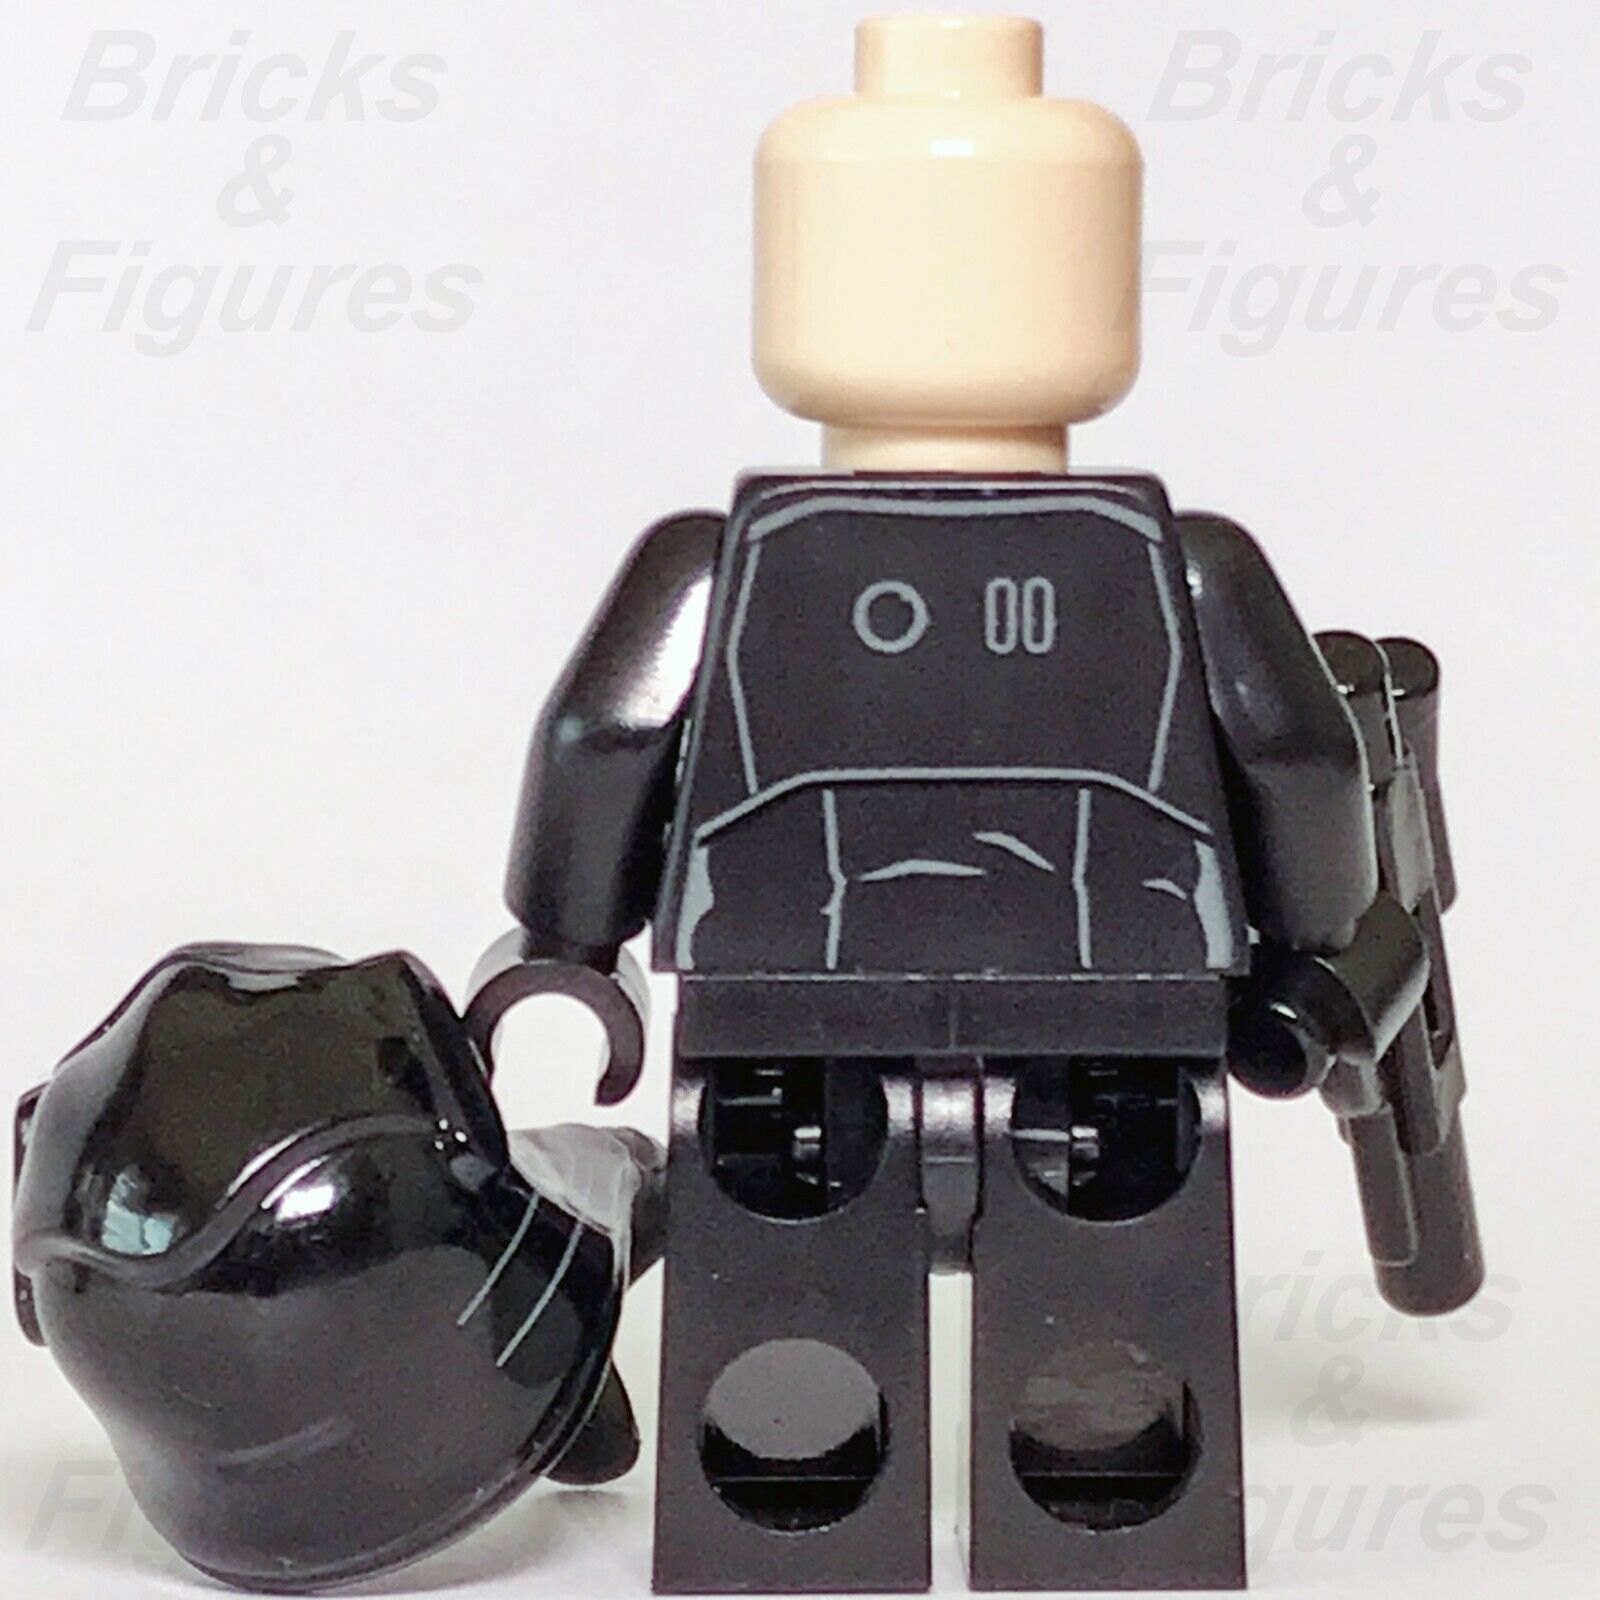 LEGO Star Wars First Order TIE Fighter Pilot Minifigure Episode 7 75101 sw0672